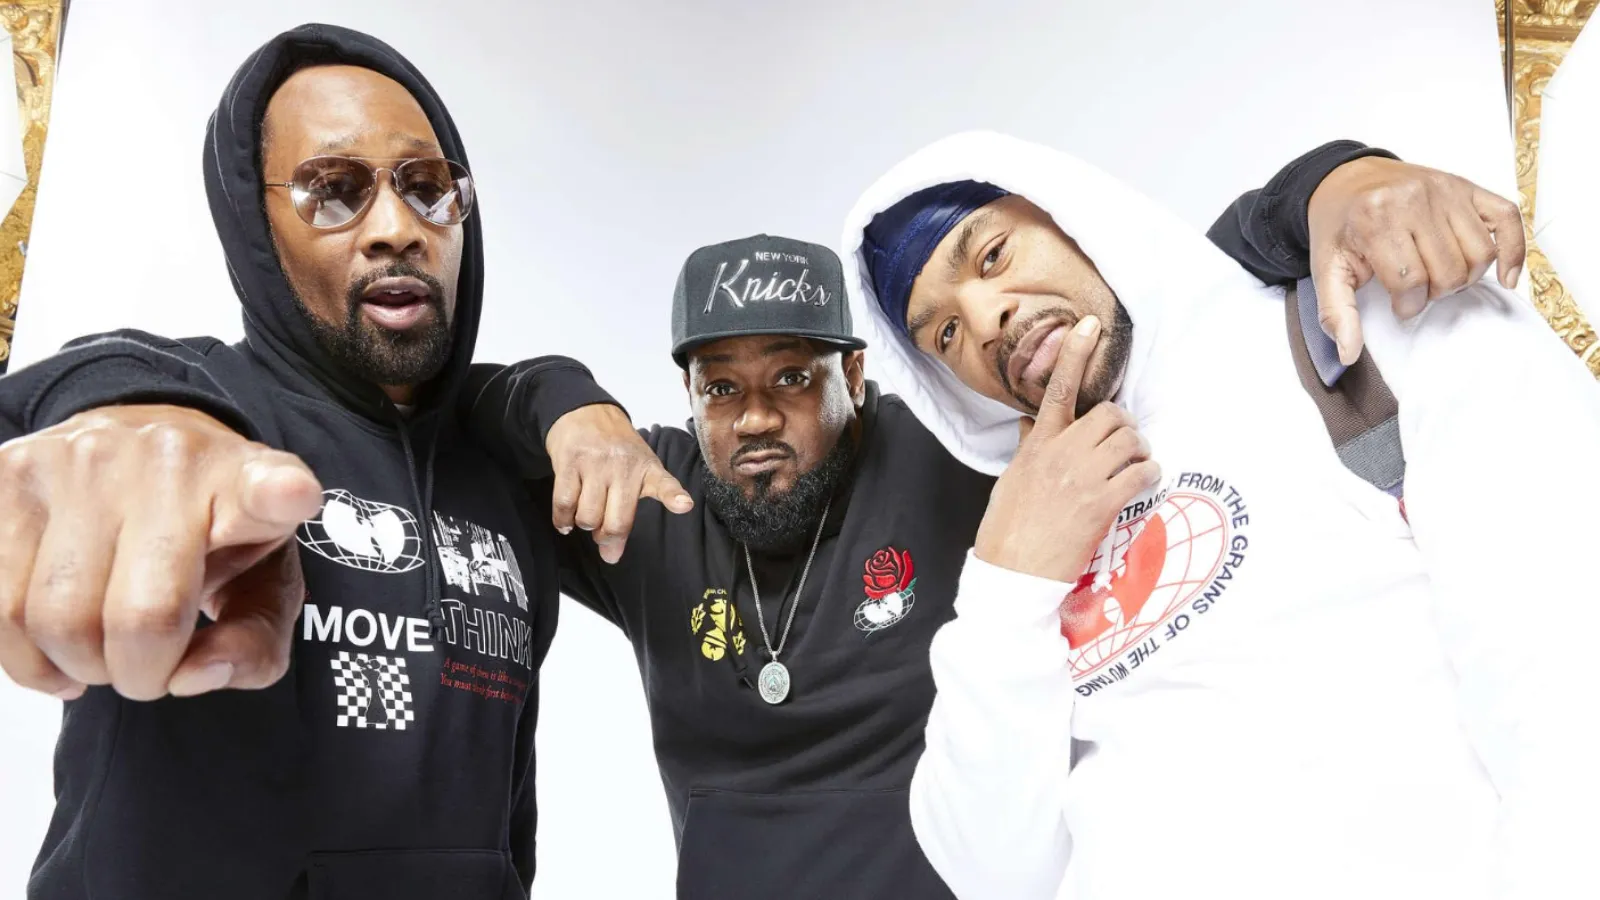 Wu-Tang Clan's RZA, Ghostface Killah, and Method Man. Image: Showtime.